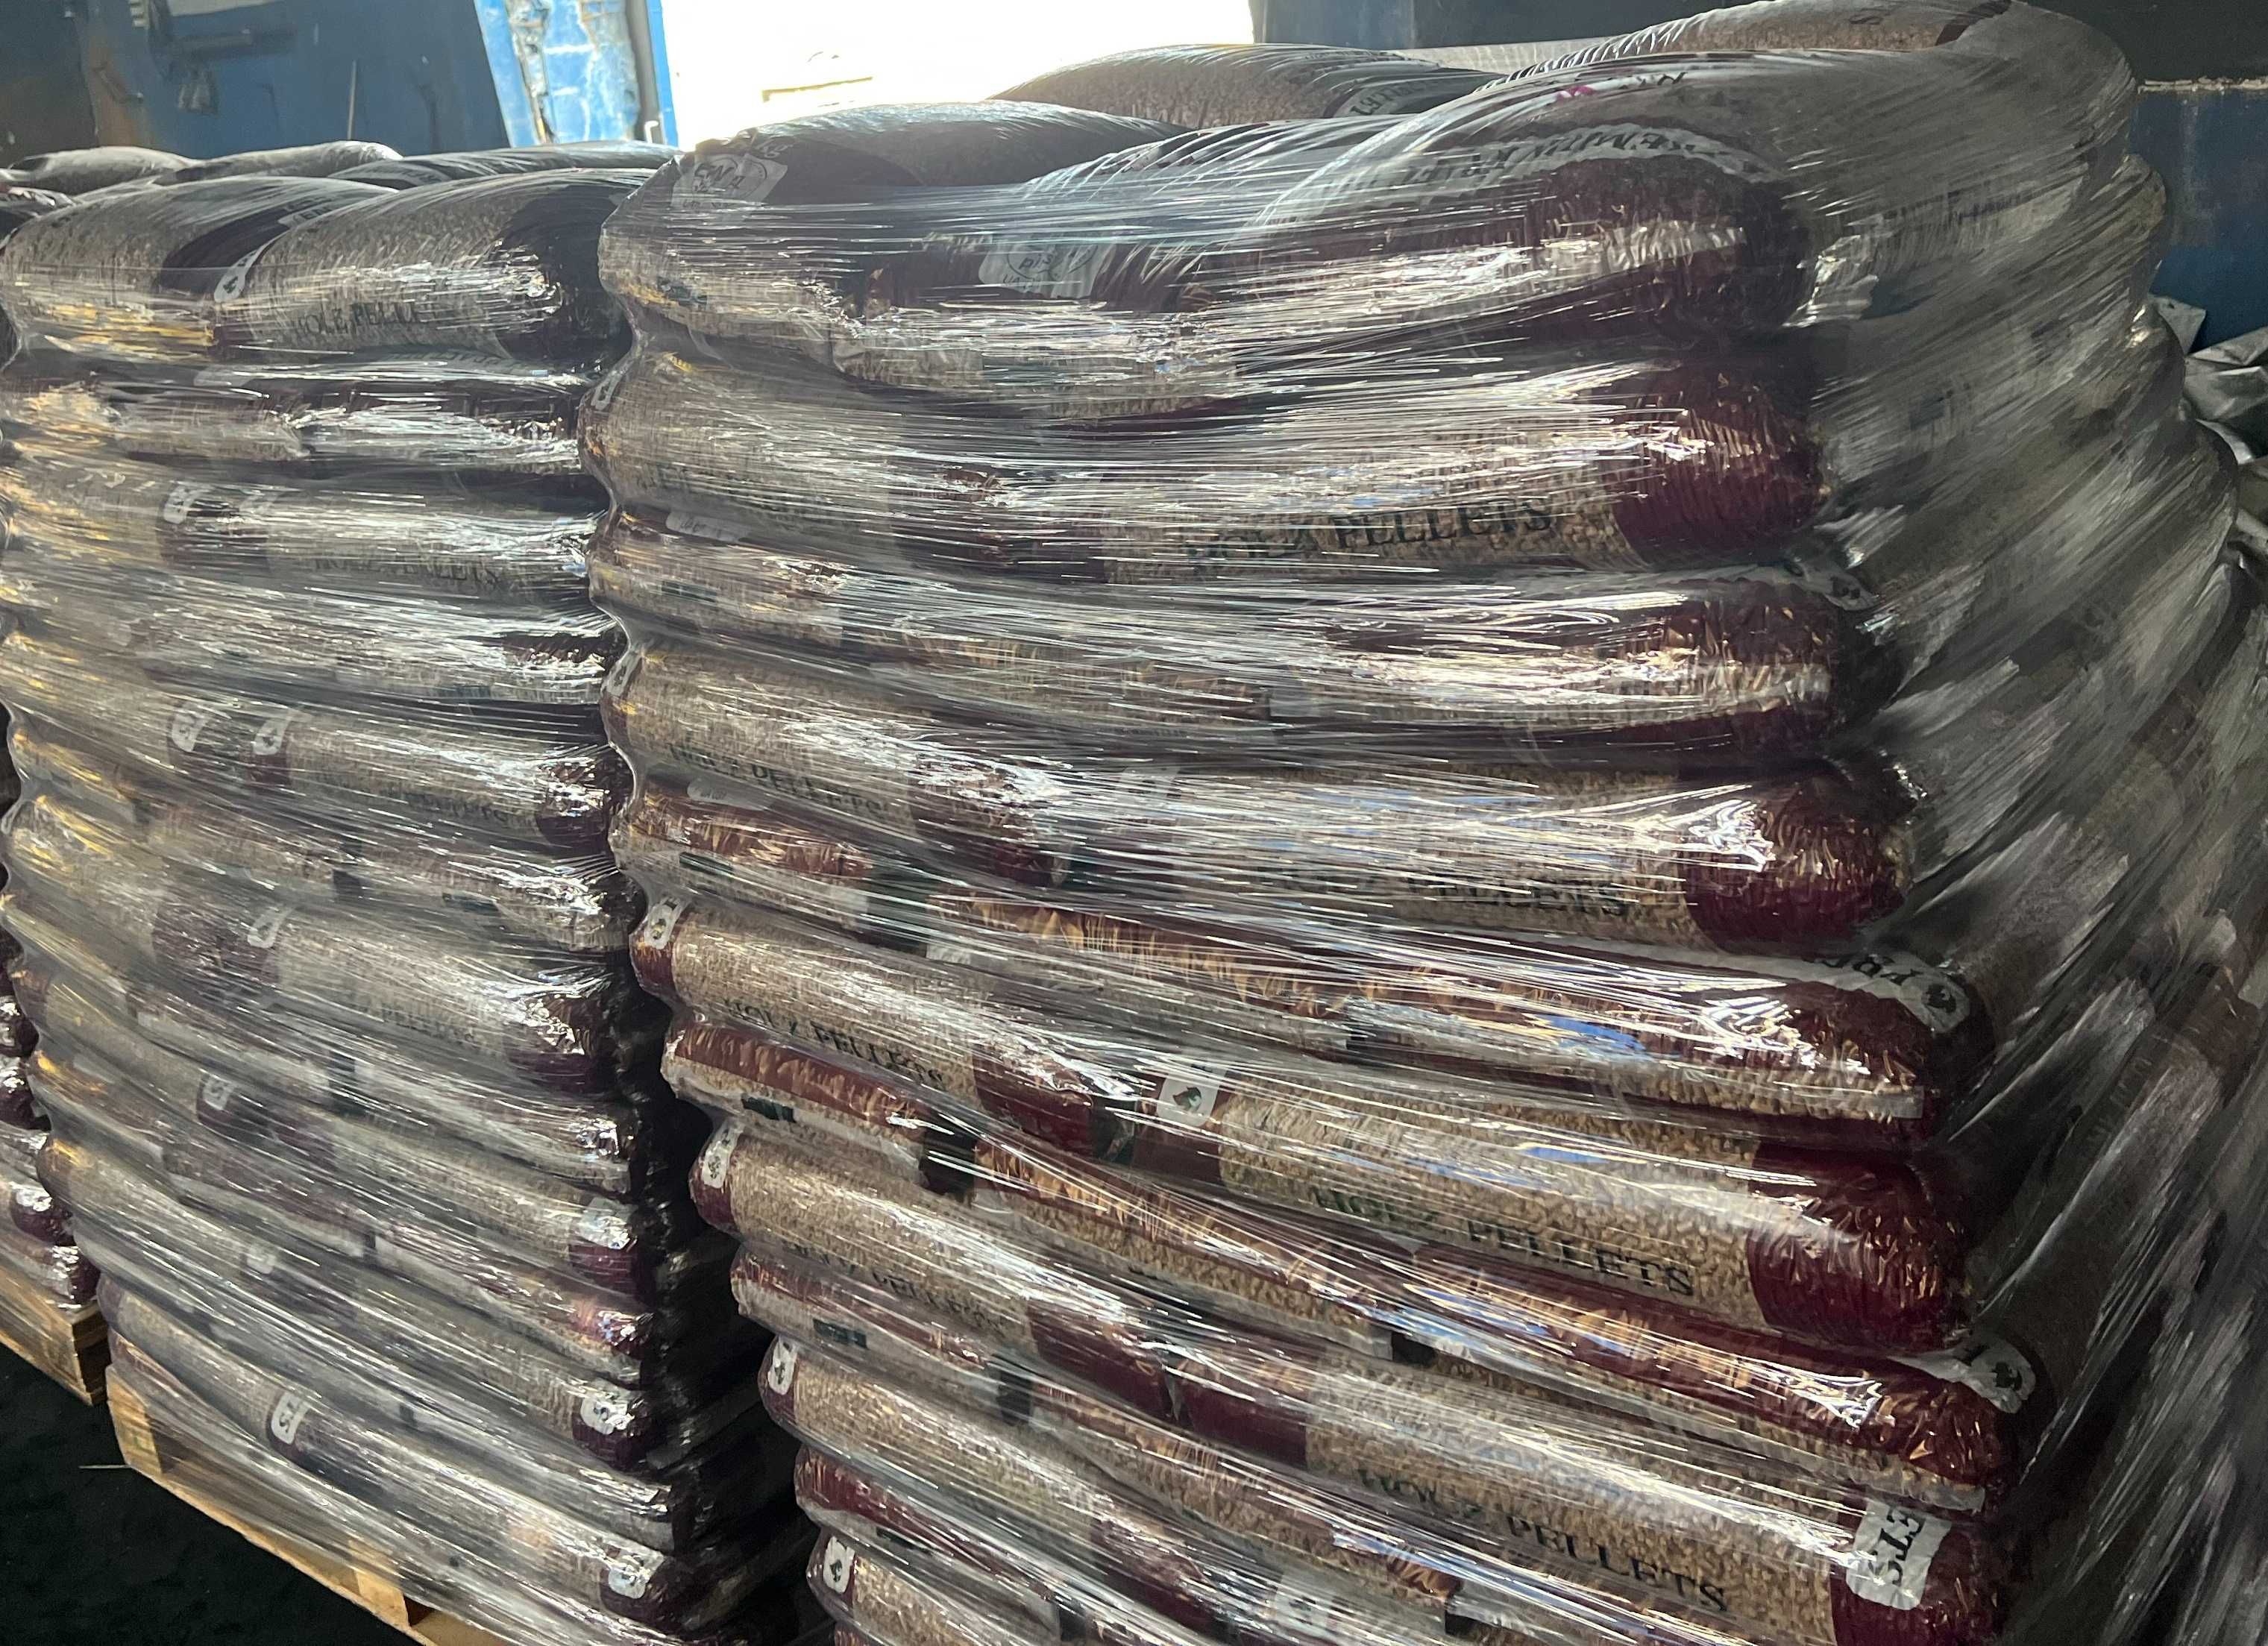 pelet PELLET drzewny sosnowy pakowany worki 15 kg dostawa GRATIS